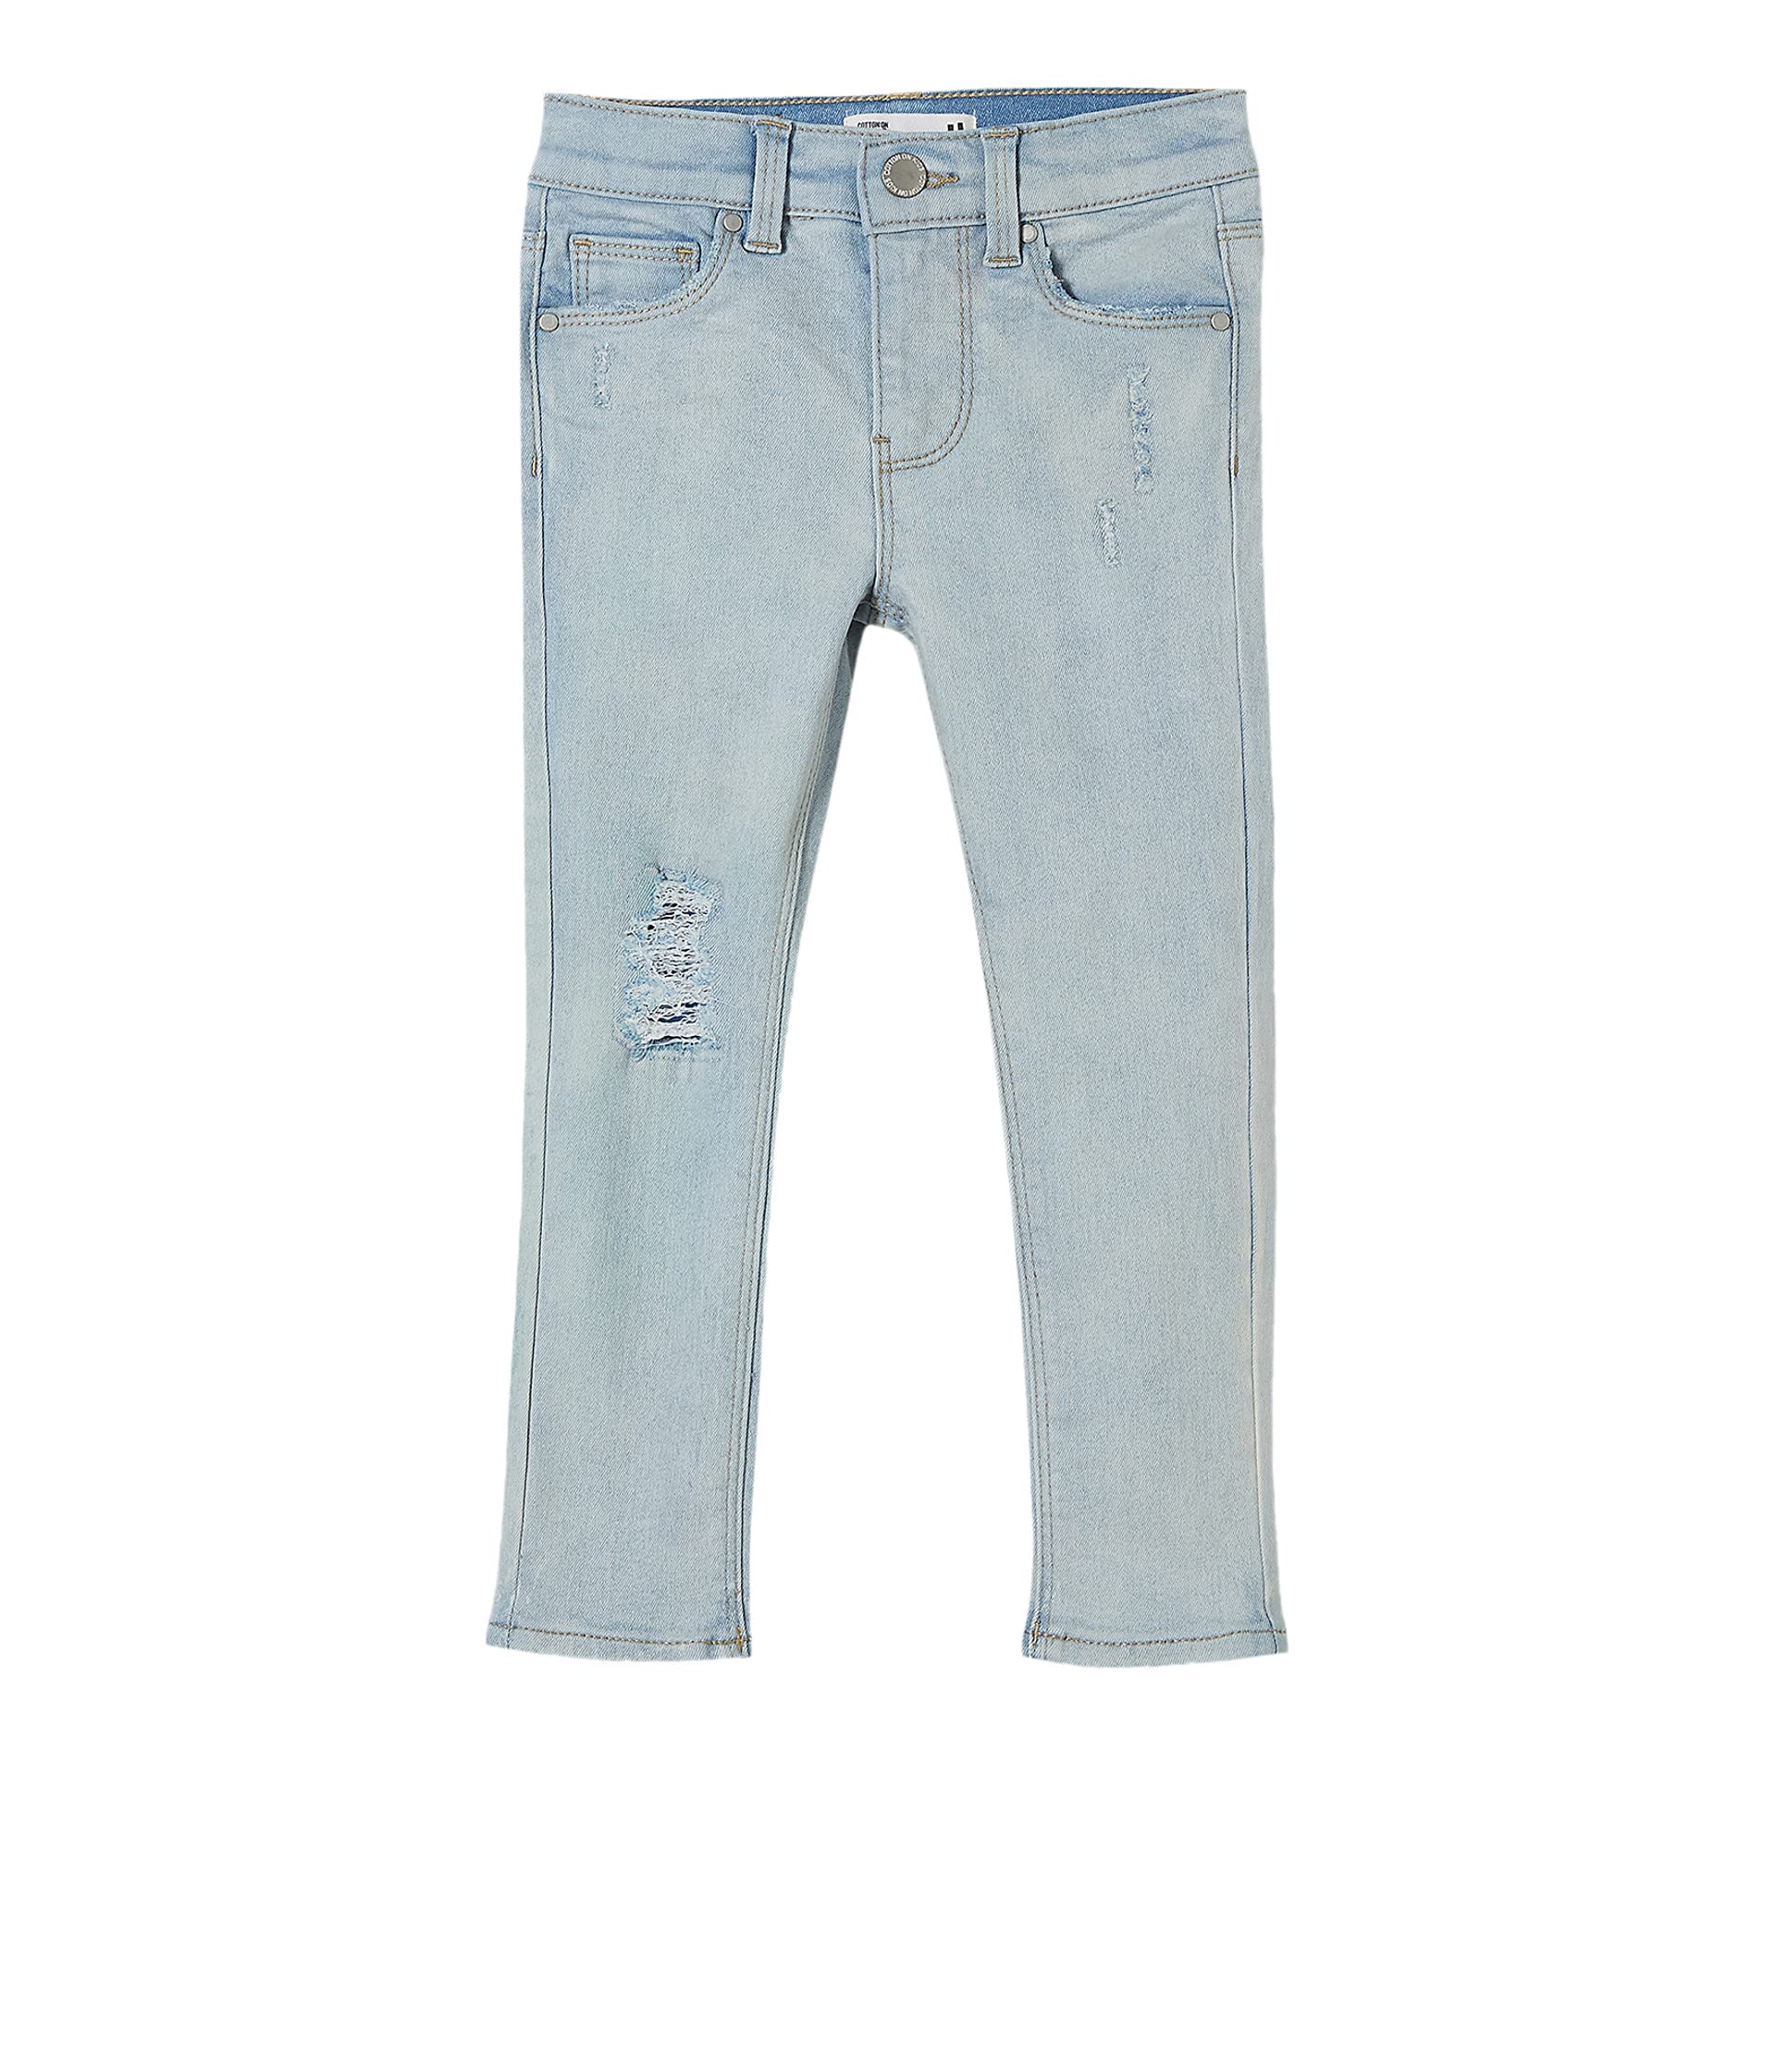 Джинсы COTTON ON, Deadre Jeans джинсовые шорты sunny cotton on цвет weekend wash rips